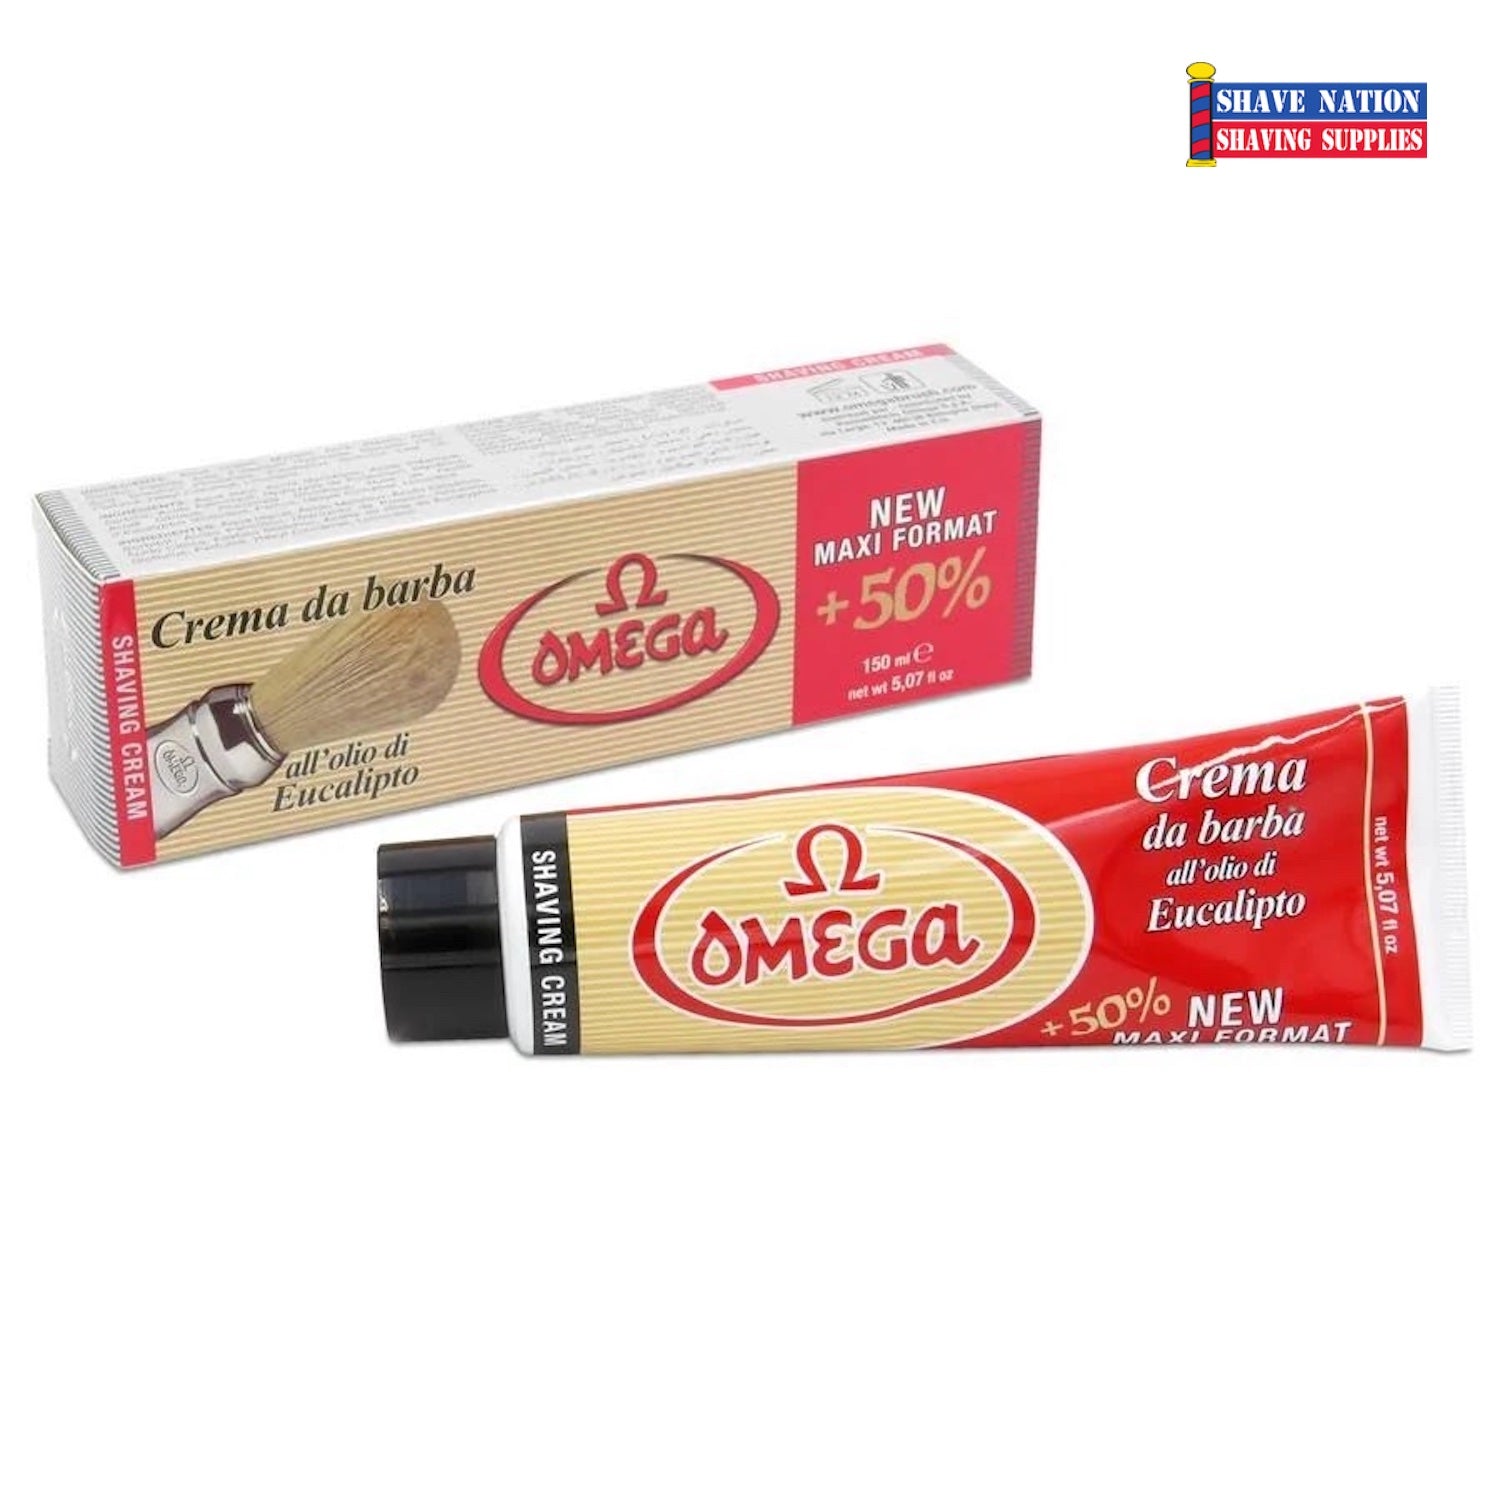 Omega Shaving Cream in Tube-New Maxi Format